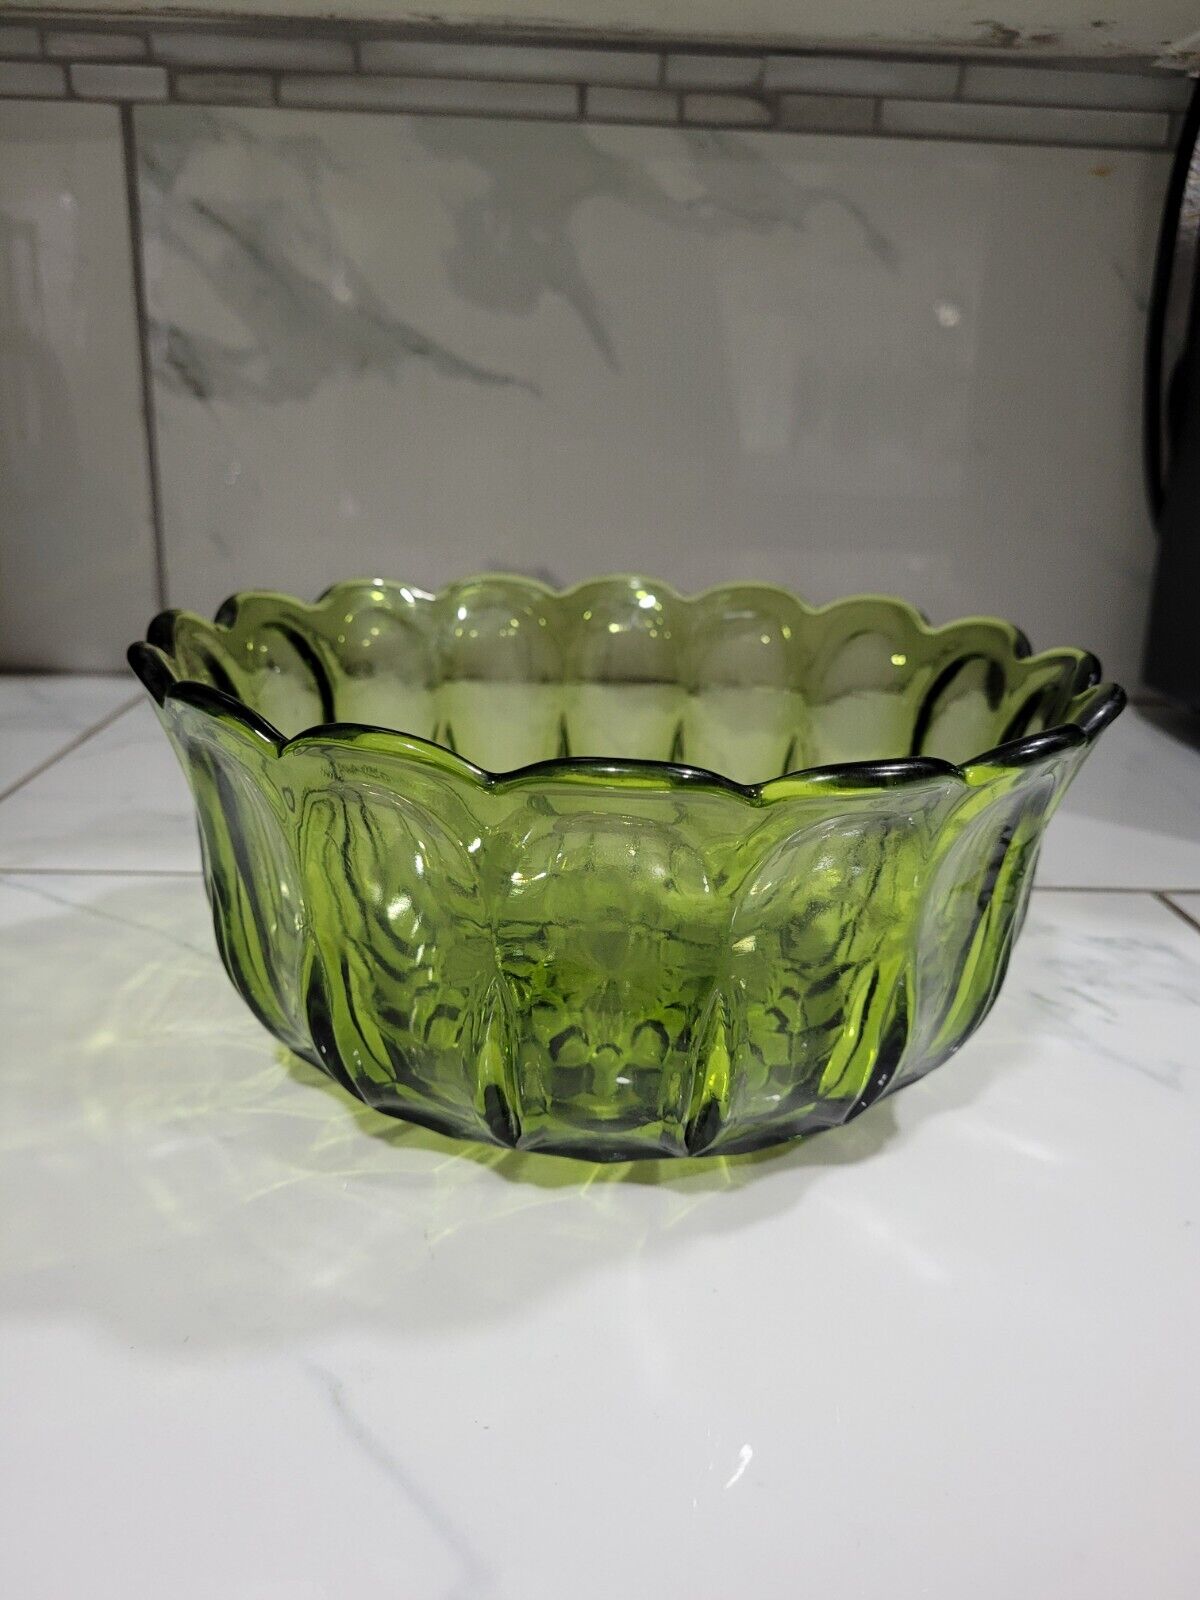 Vintage Glass Serving Bowl Green 1970s Era